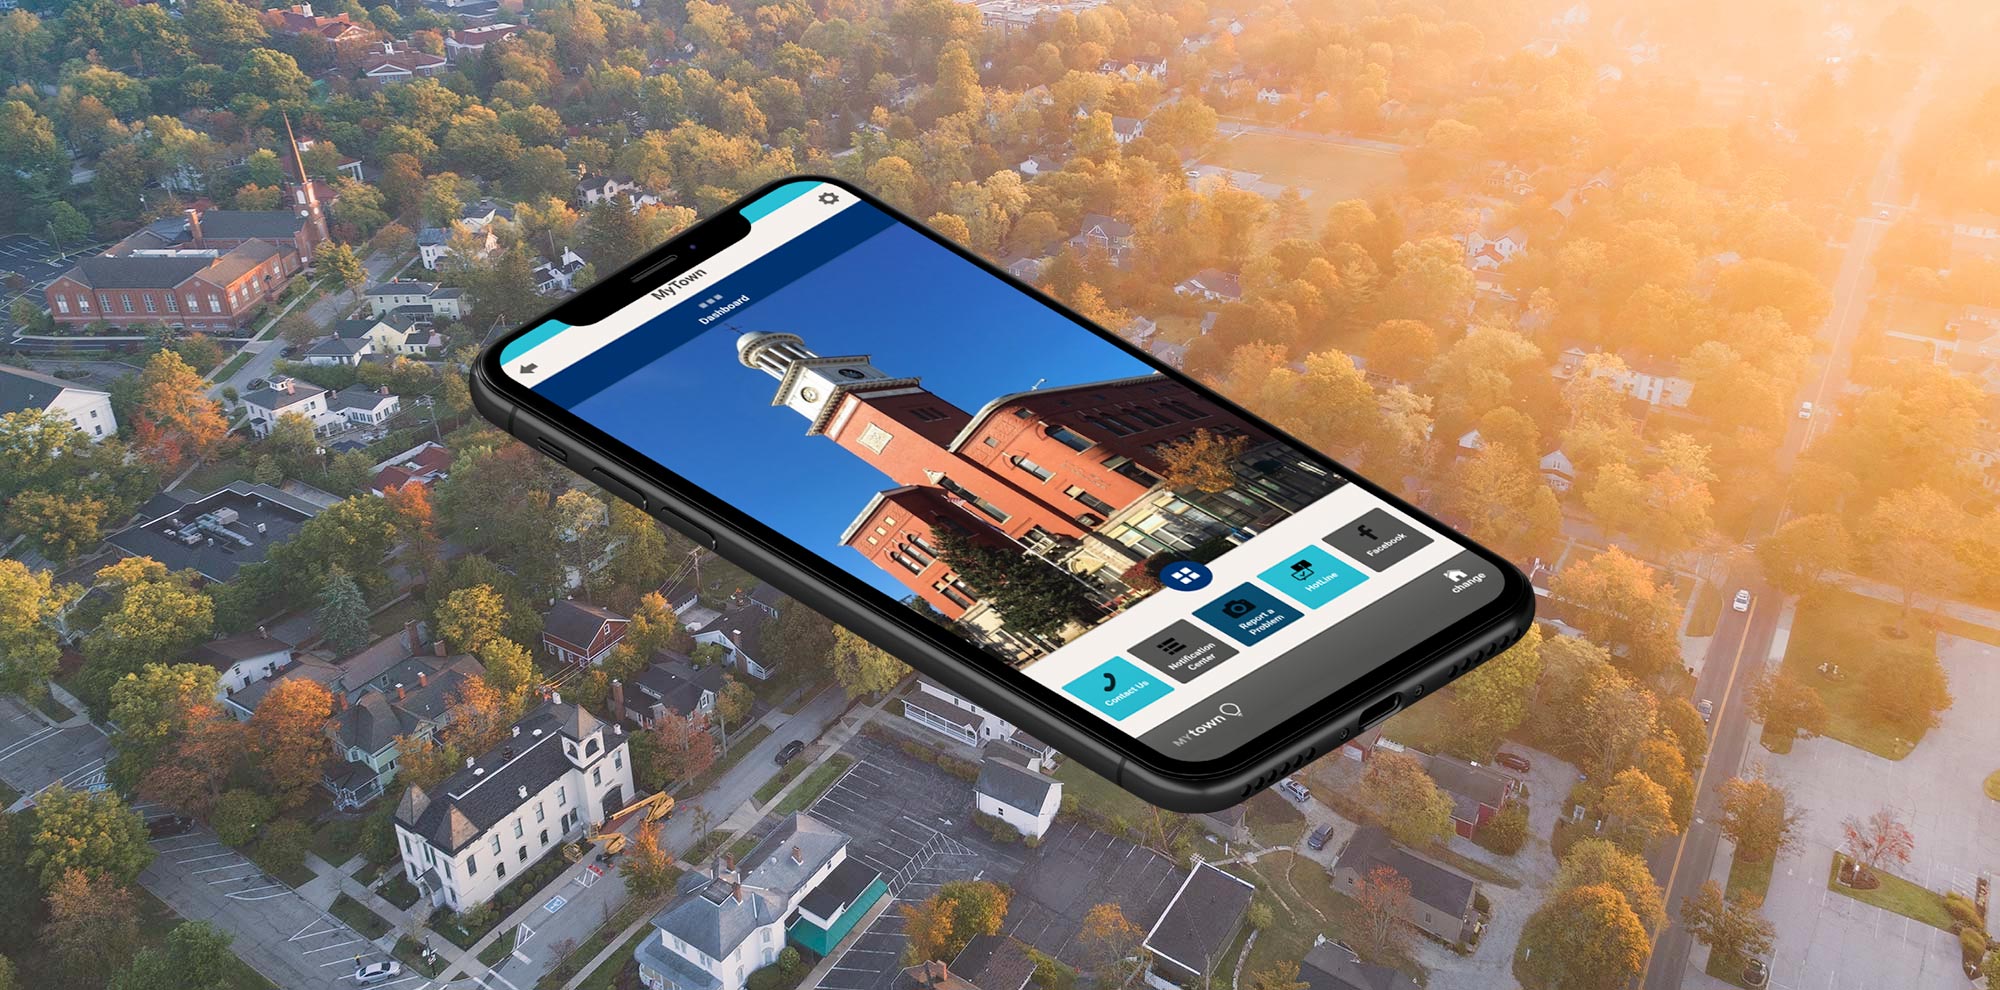 Smart City App Launched